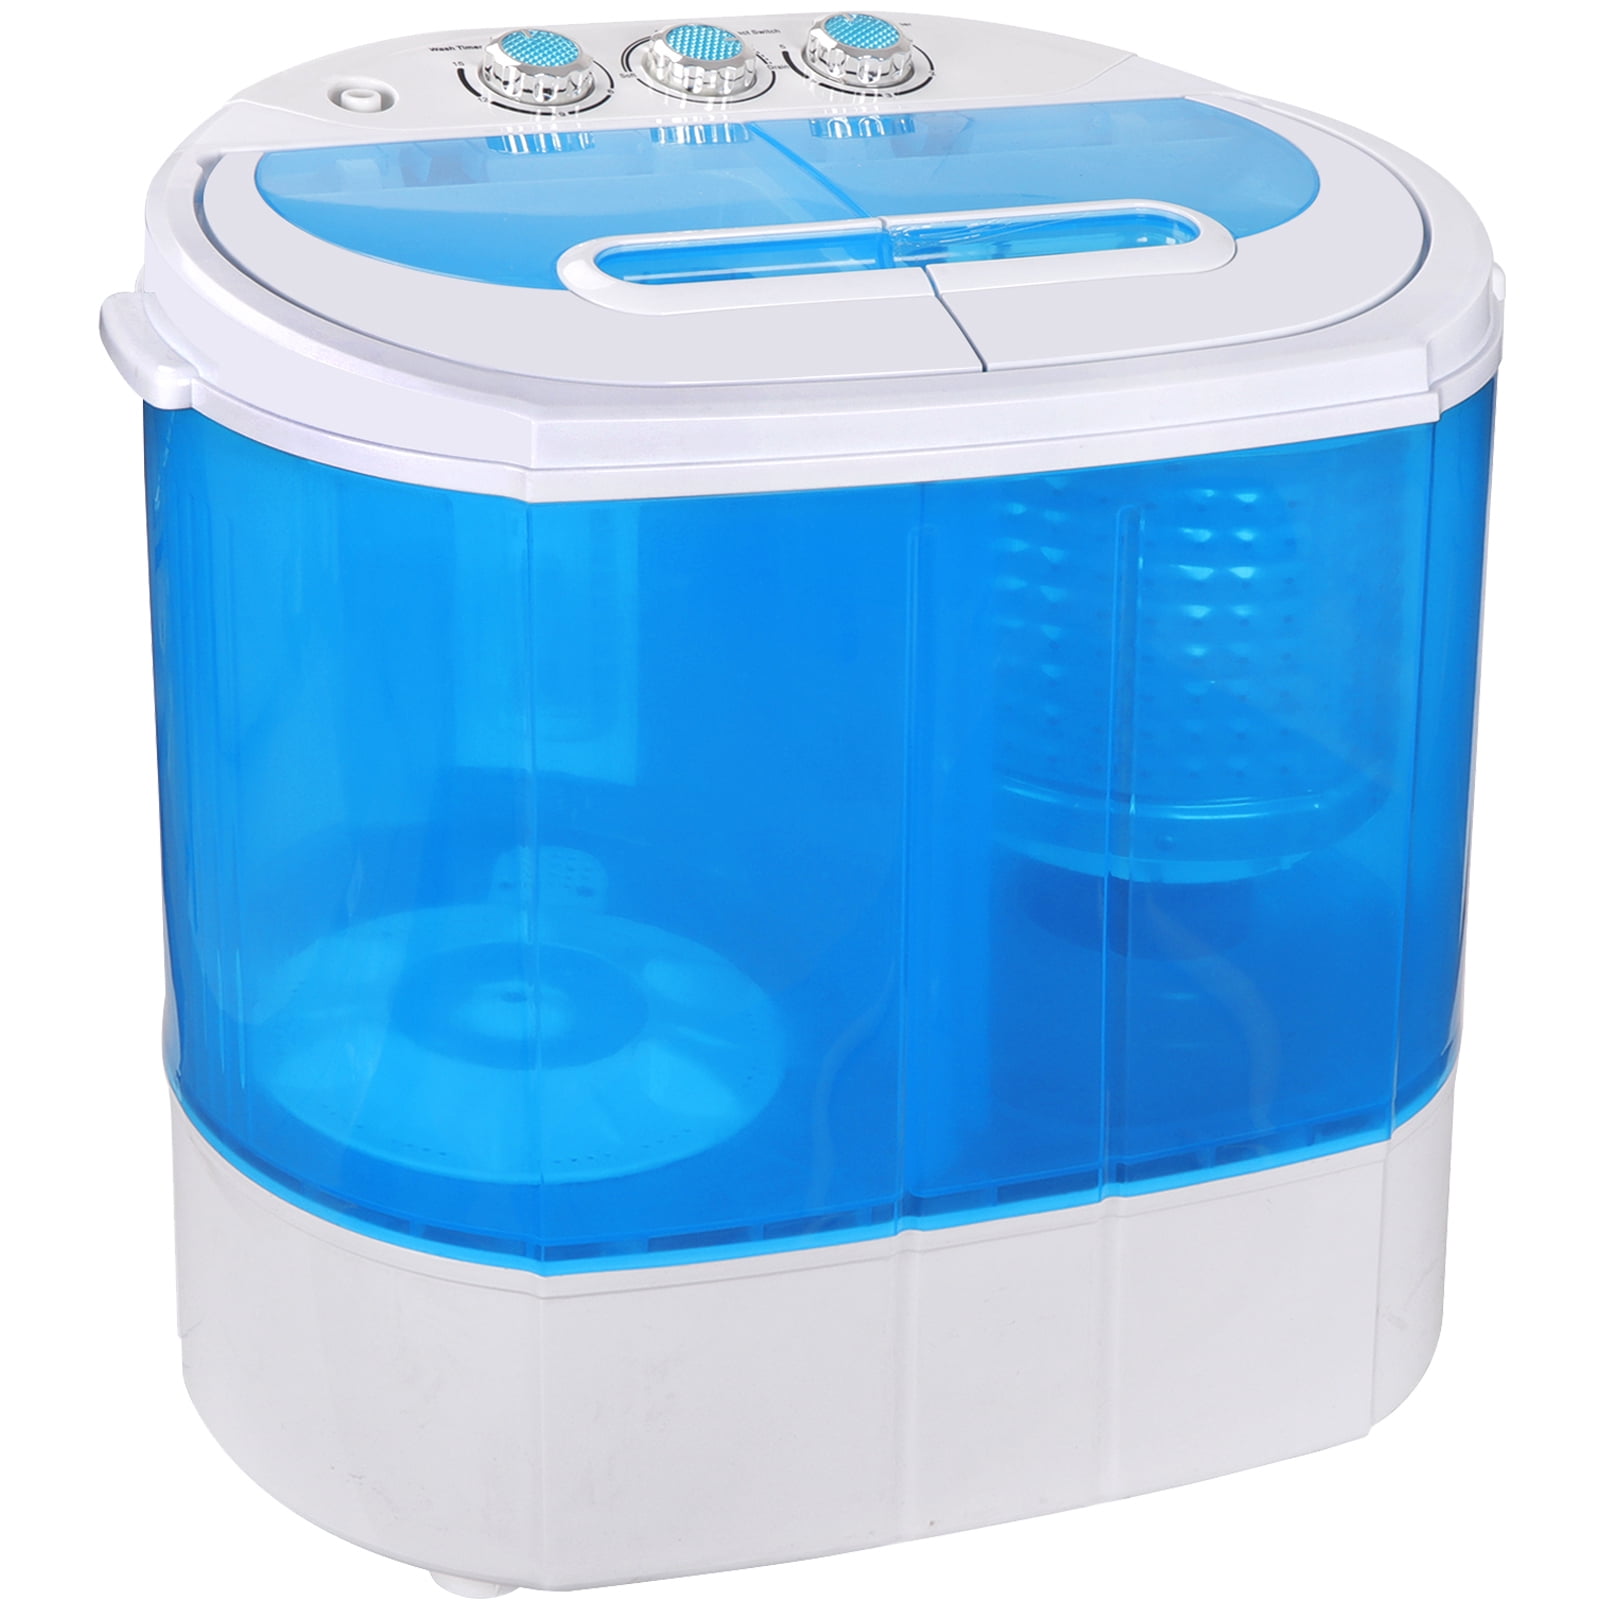 Portable Washing Machine Compact Mini Twin Tub Washing Machine w/Wash and Spin Cycle 12.4 lb Built-in Gravity Drain 